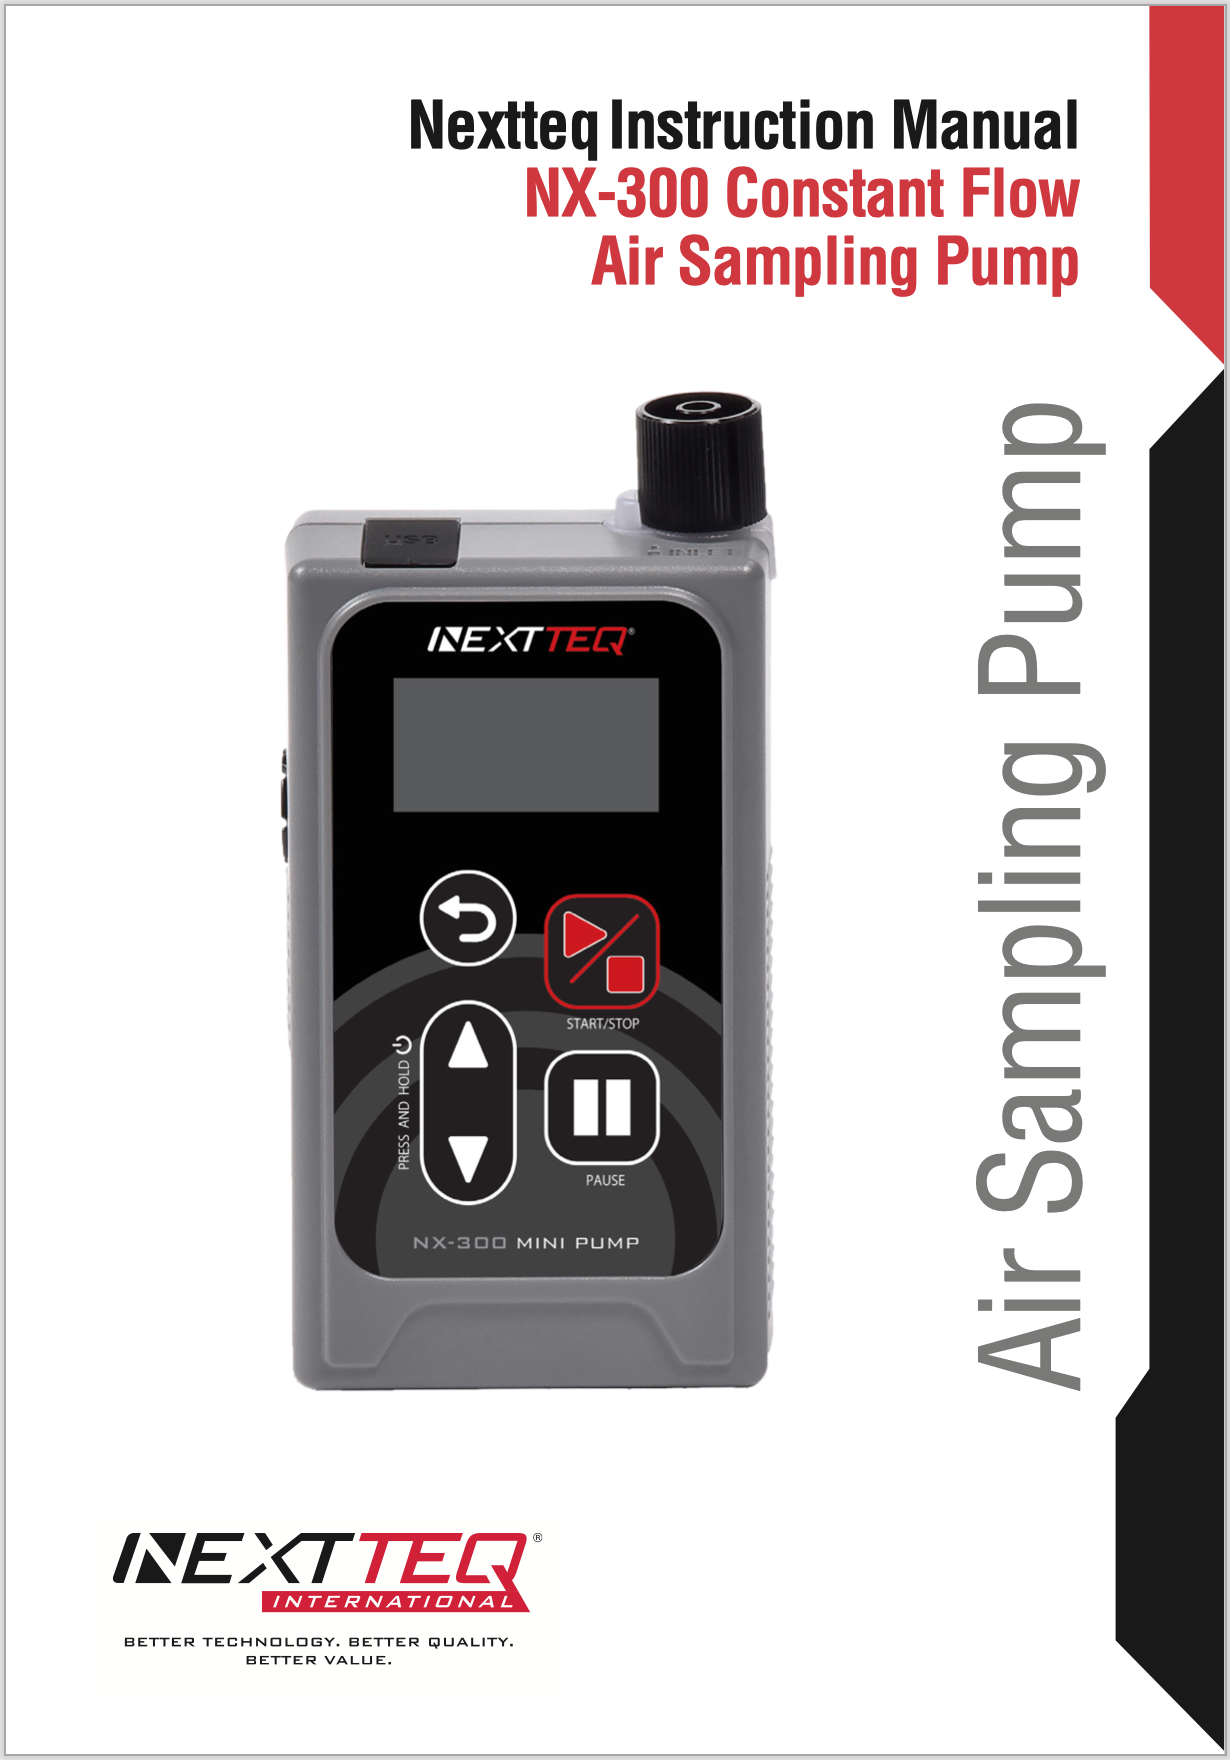 NX-300 Constant Flow Air Sampling Pump Manual.